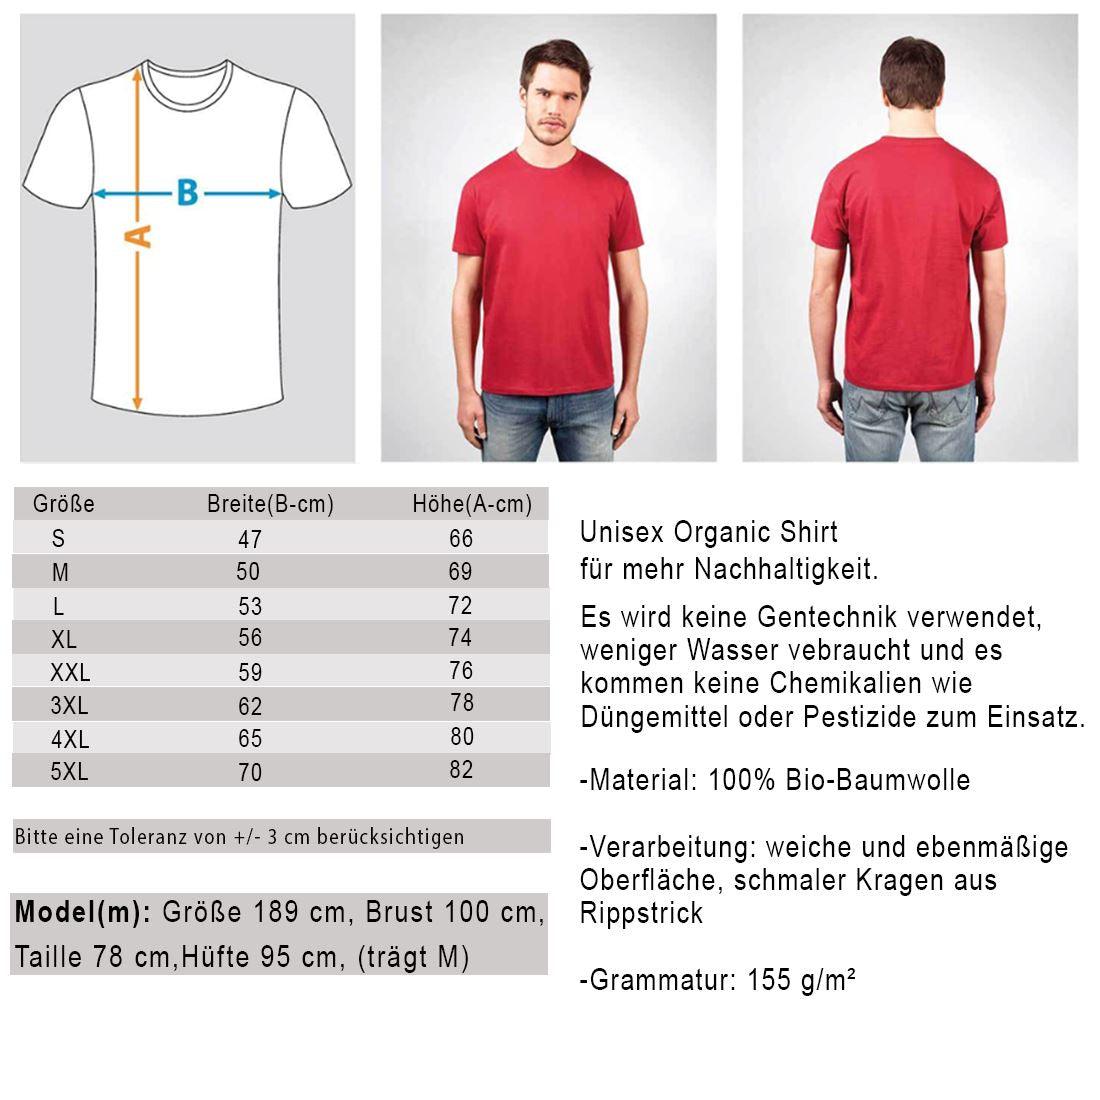 Lasst die Sau raus - Unisex Organic Shirt Rocker T-Shirt ST/ST Shirtee 